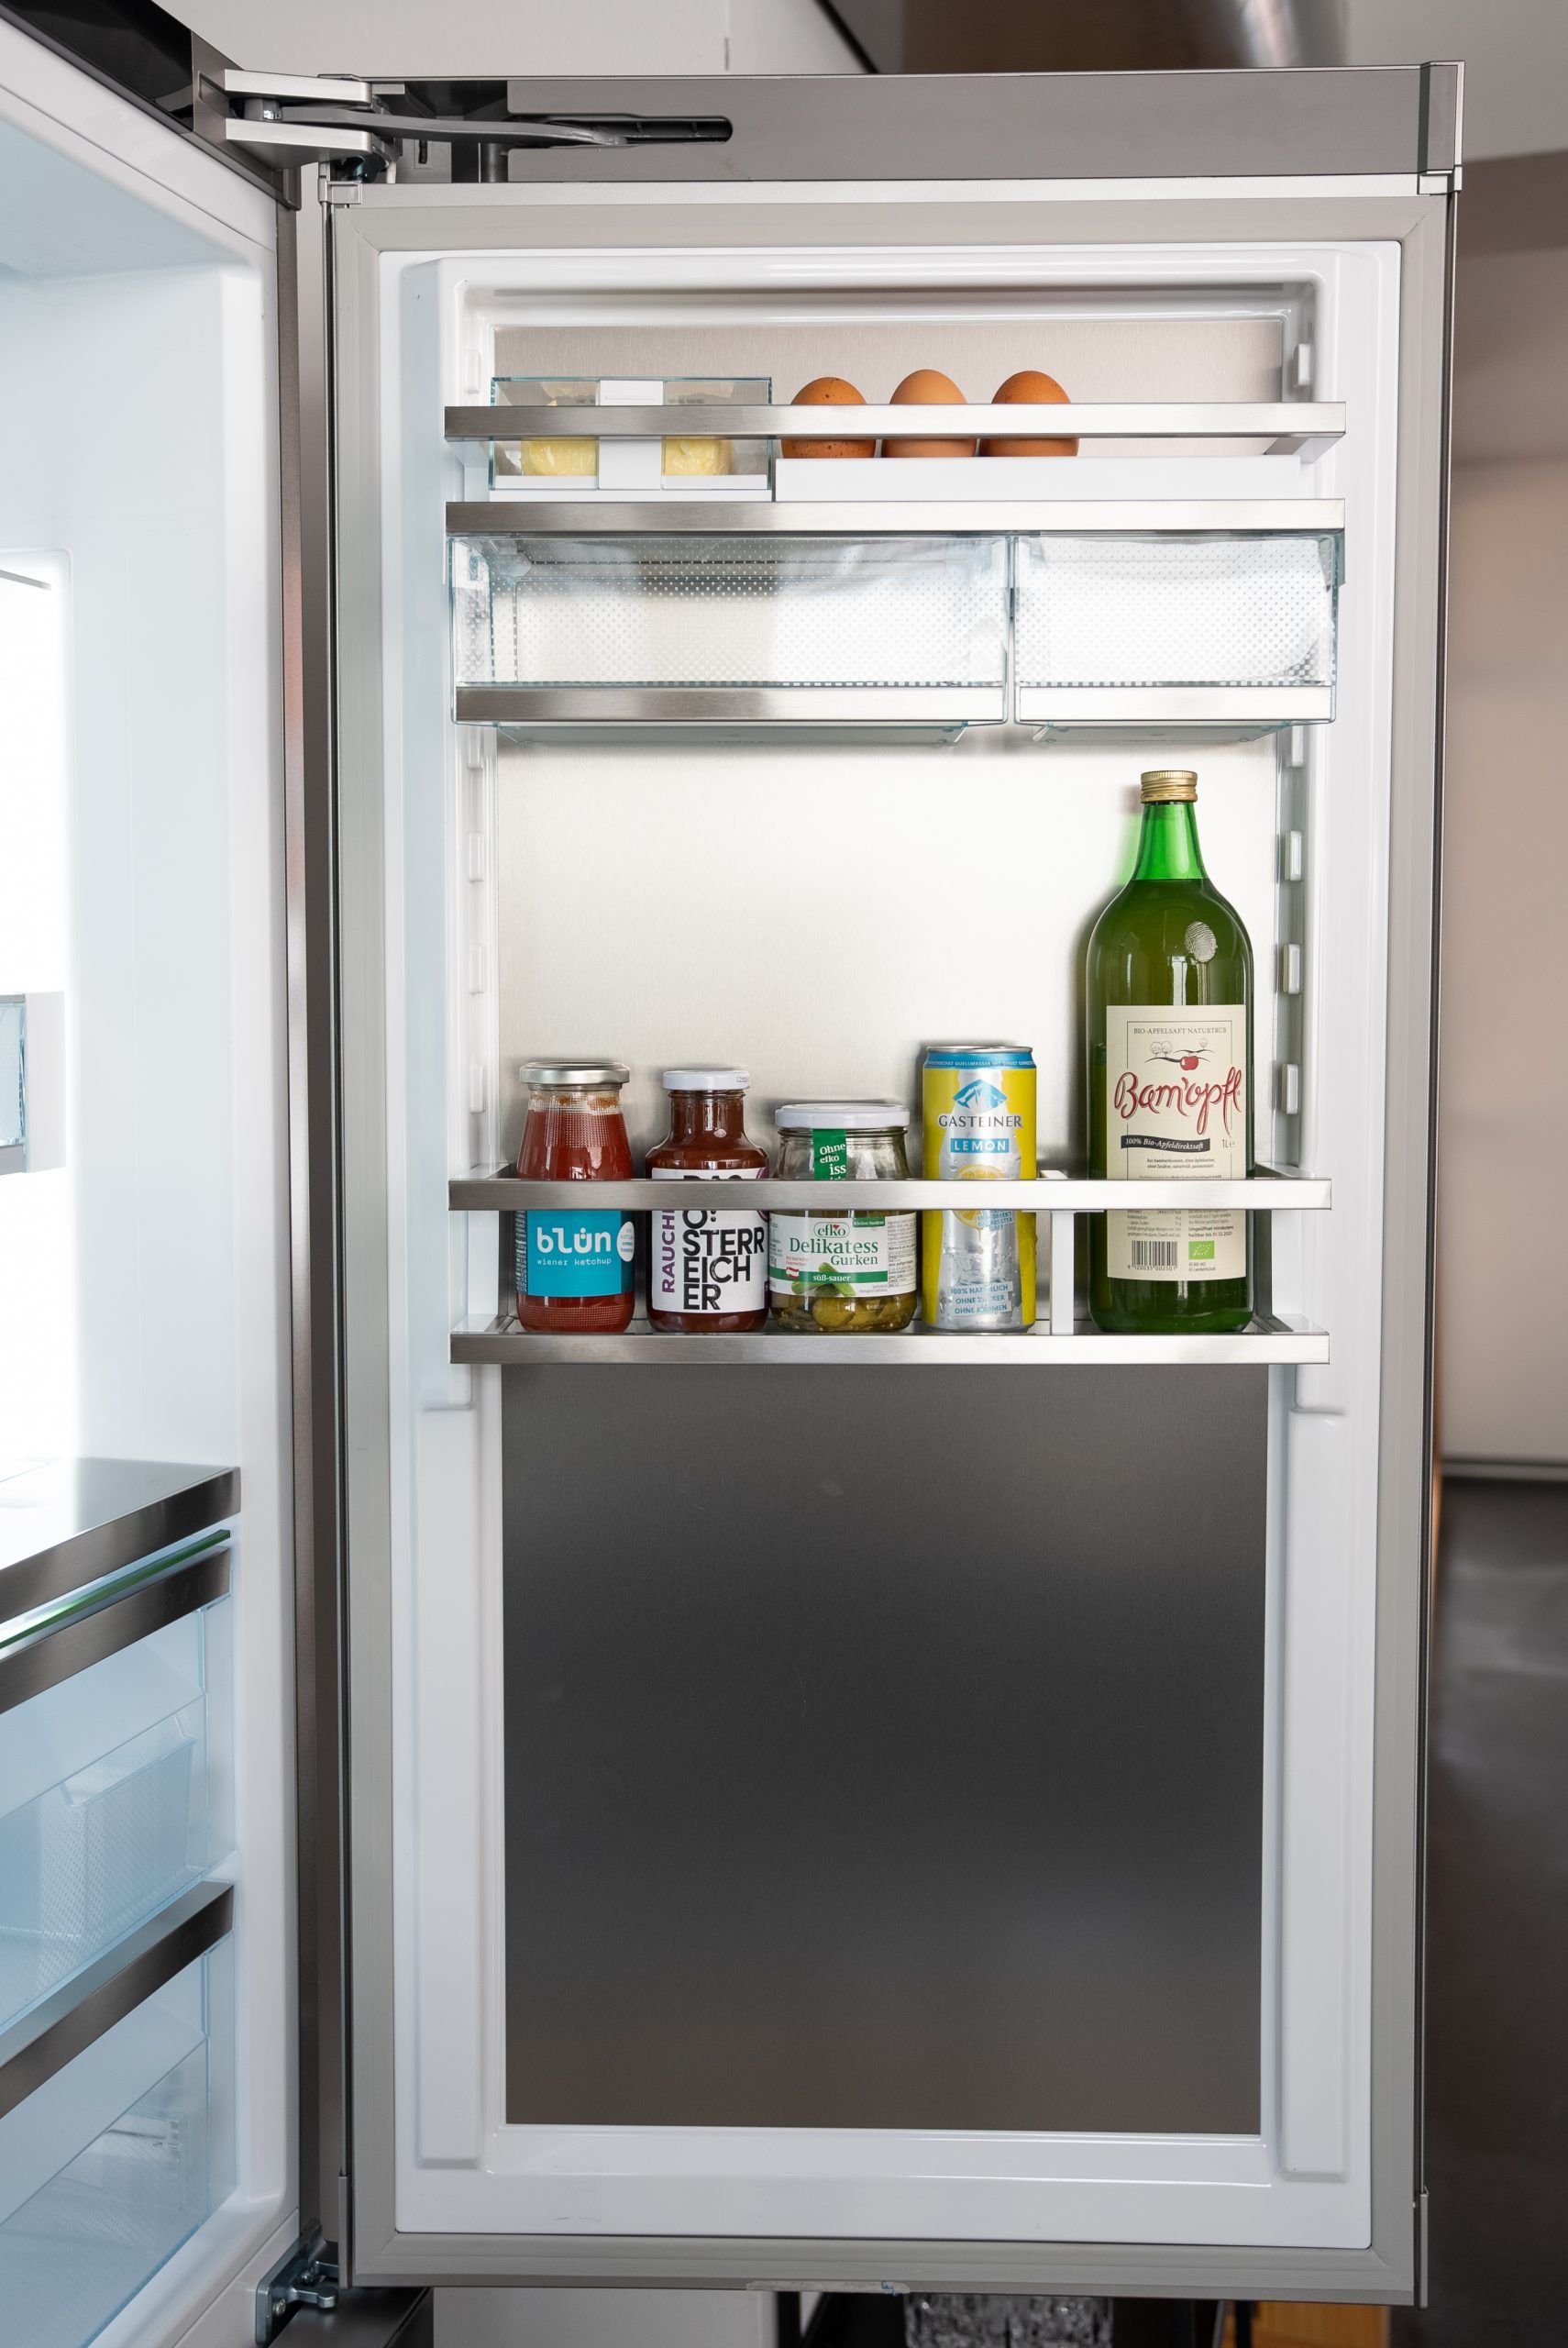 Lebensmittel richtig im Kühlschrank einräumen